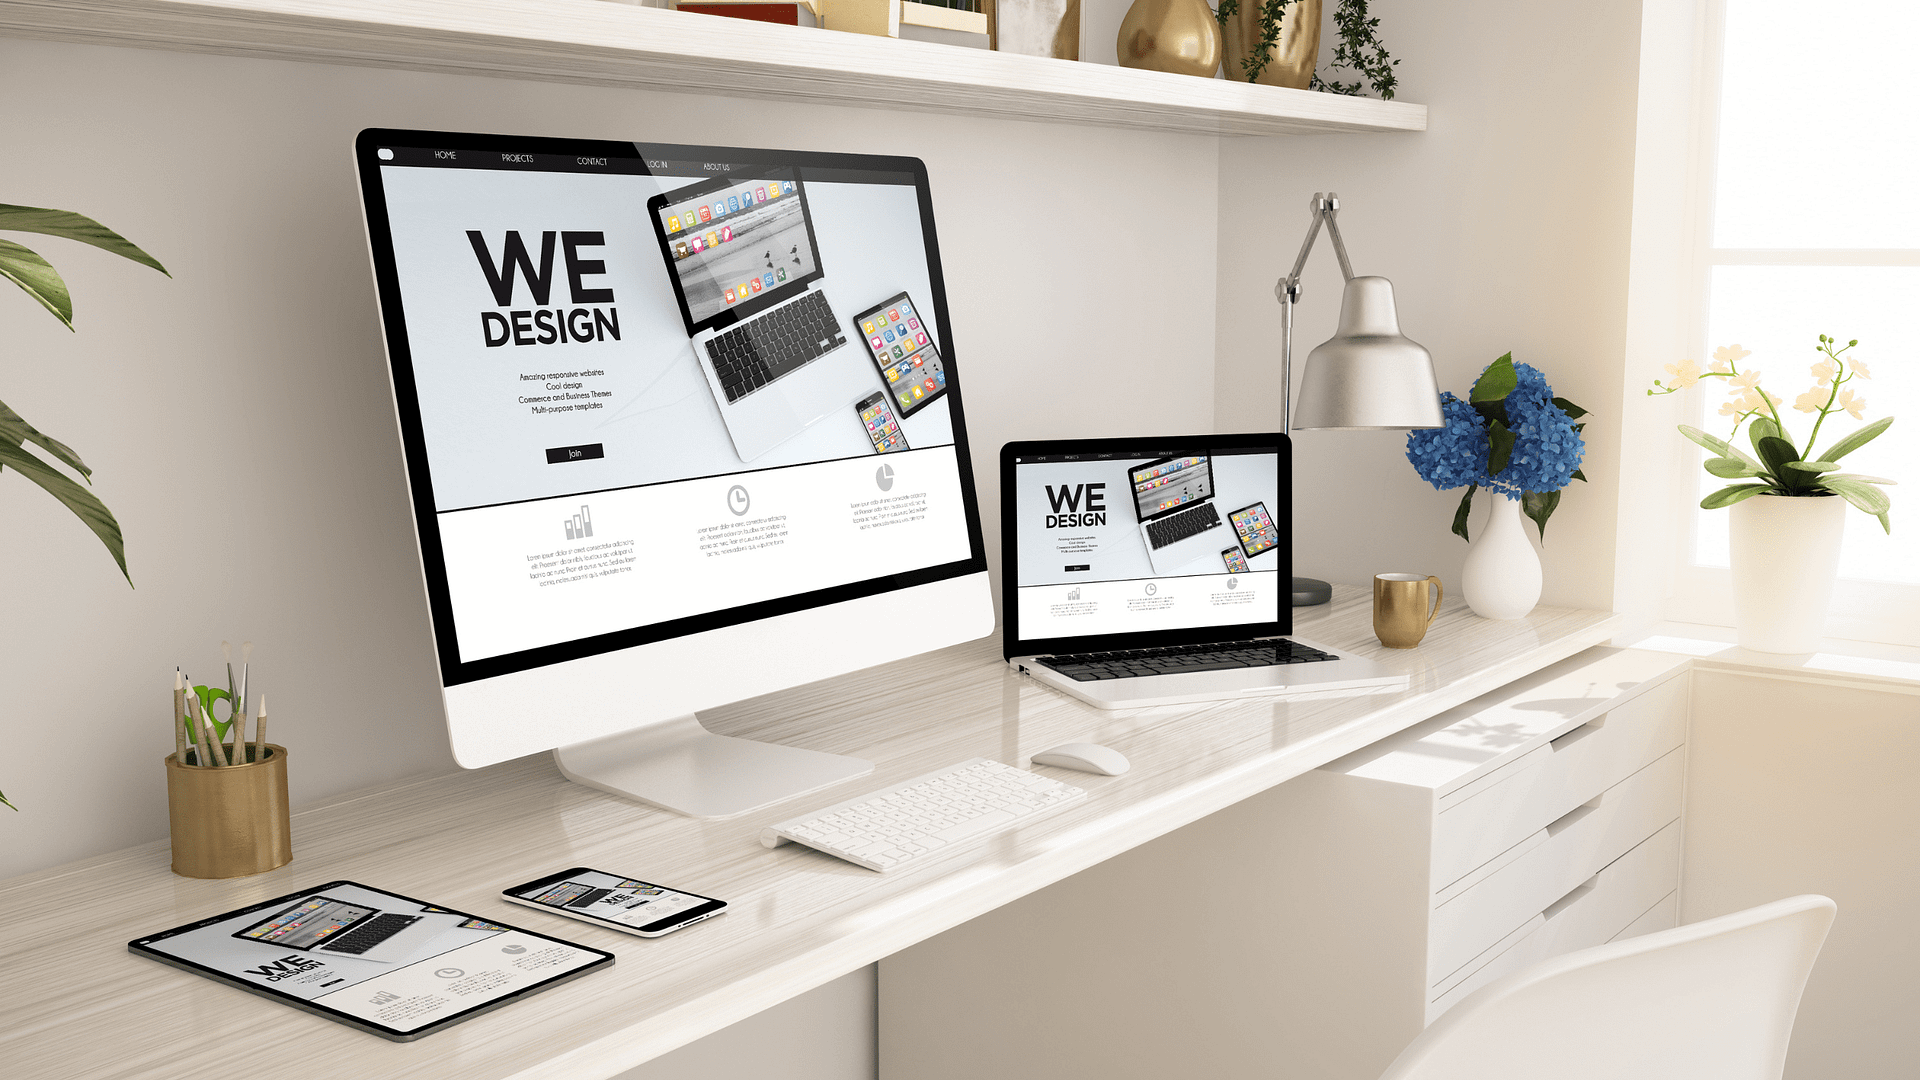 Professional website design services in Des Moines, Iowa